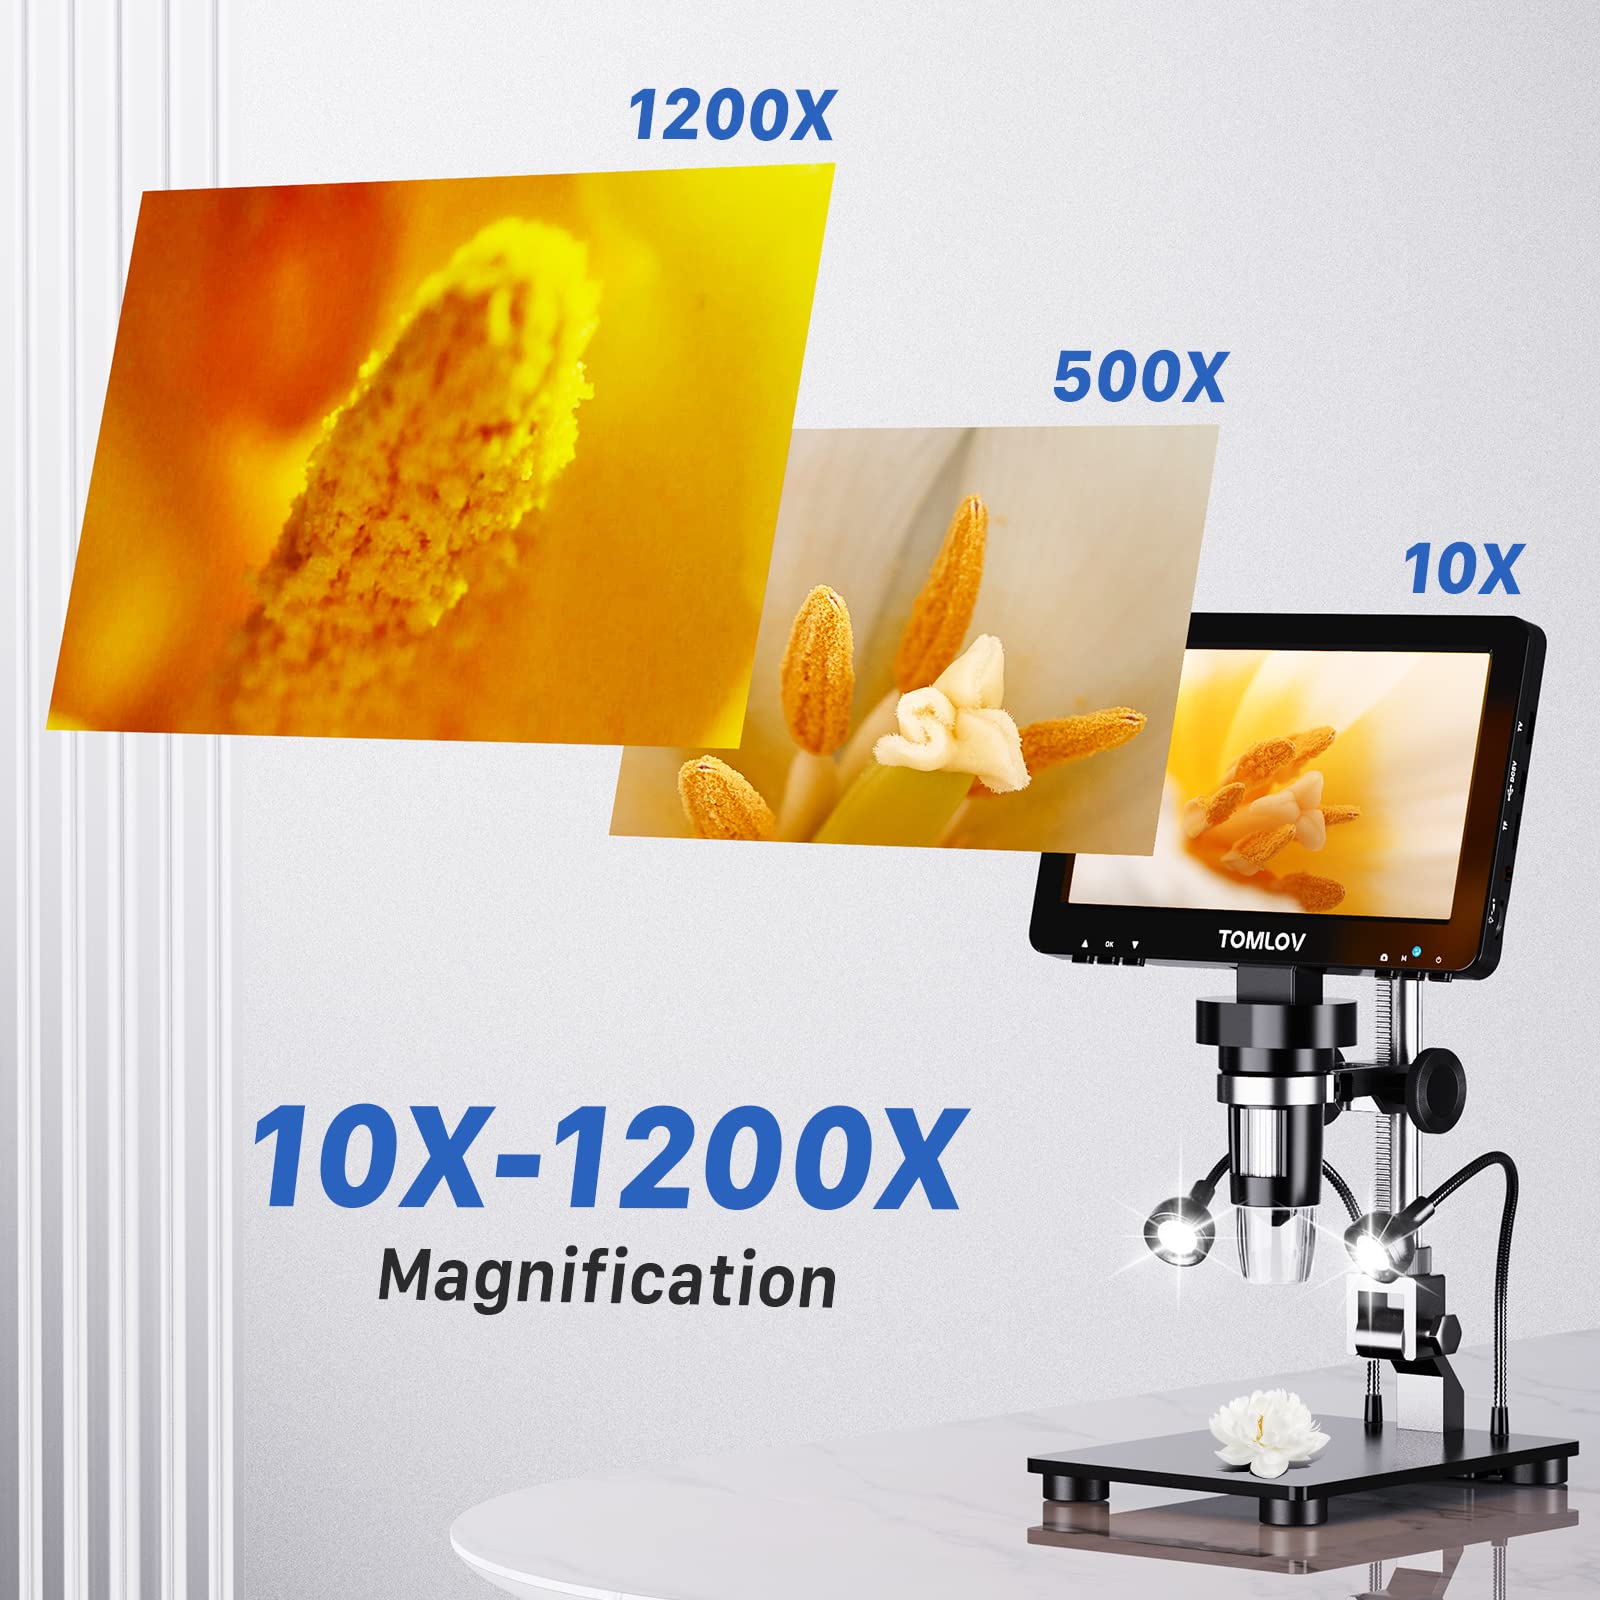 TOMLOV DM9 Pro HDMI Digital Microscope with 7'' IPS Screen